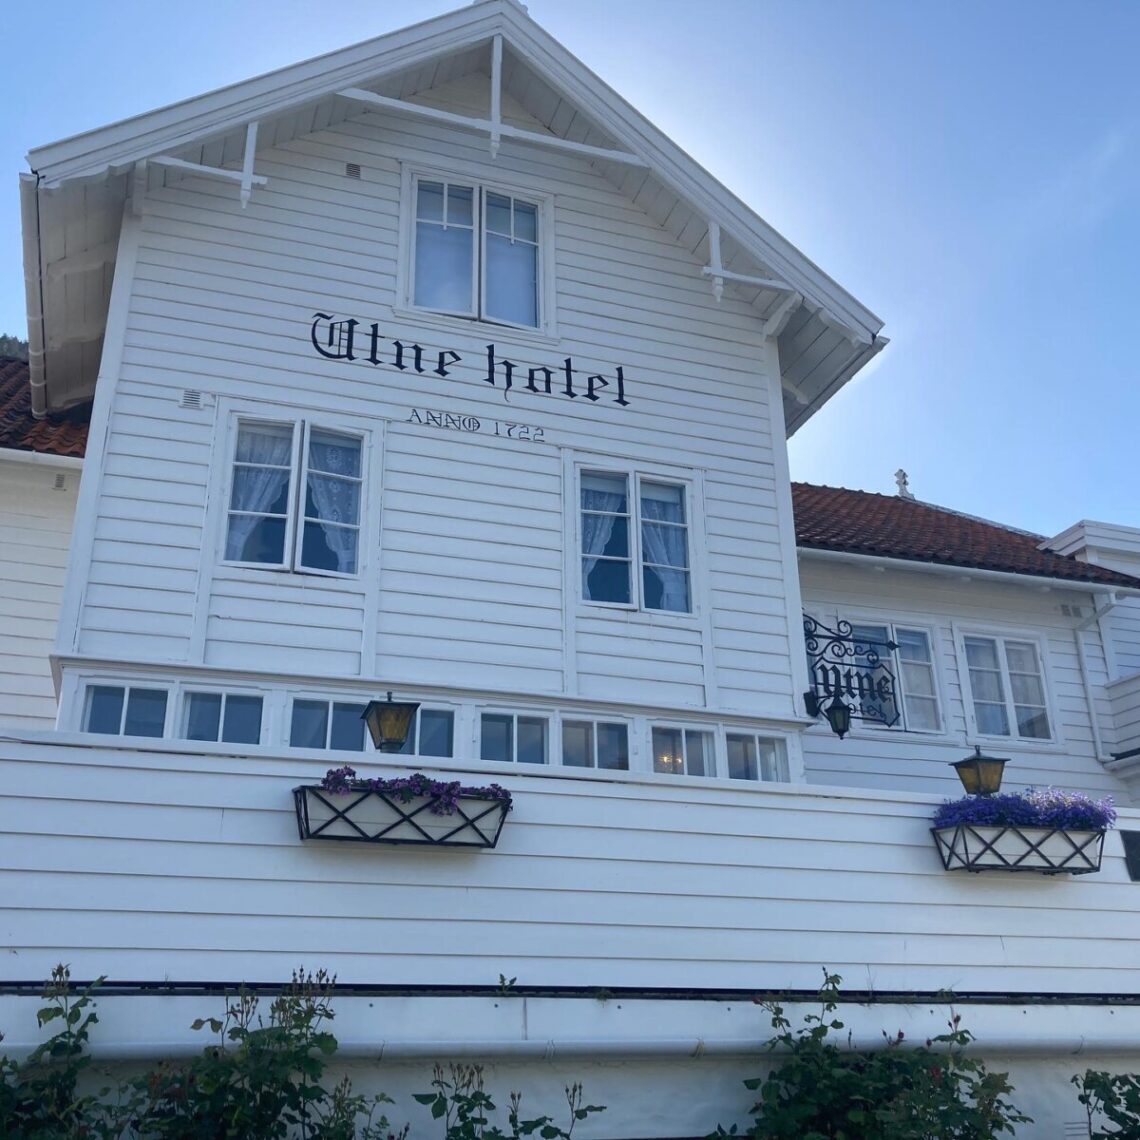 Utne Hotel i Hardanger